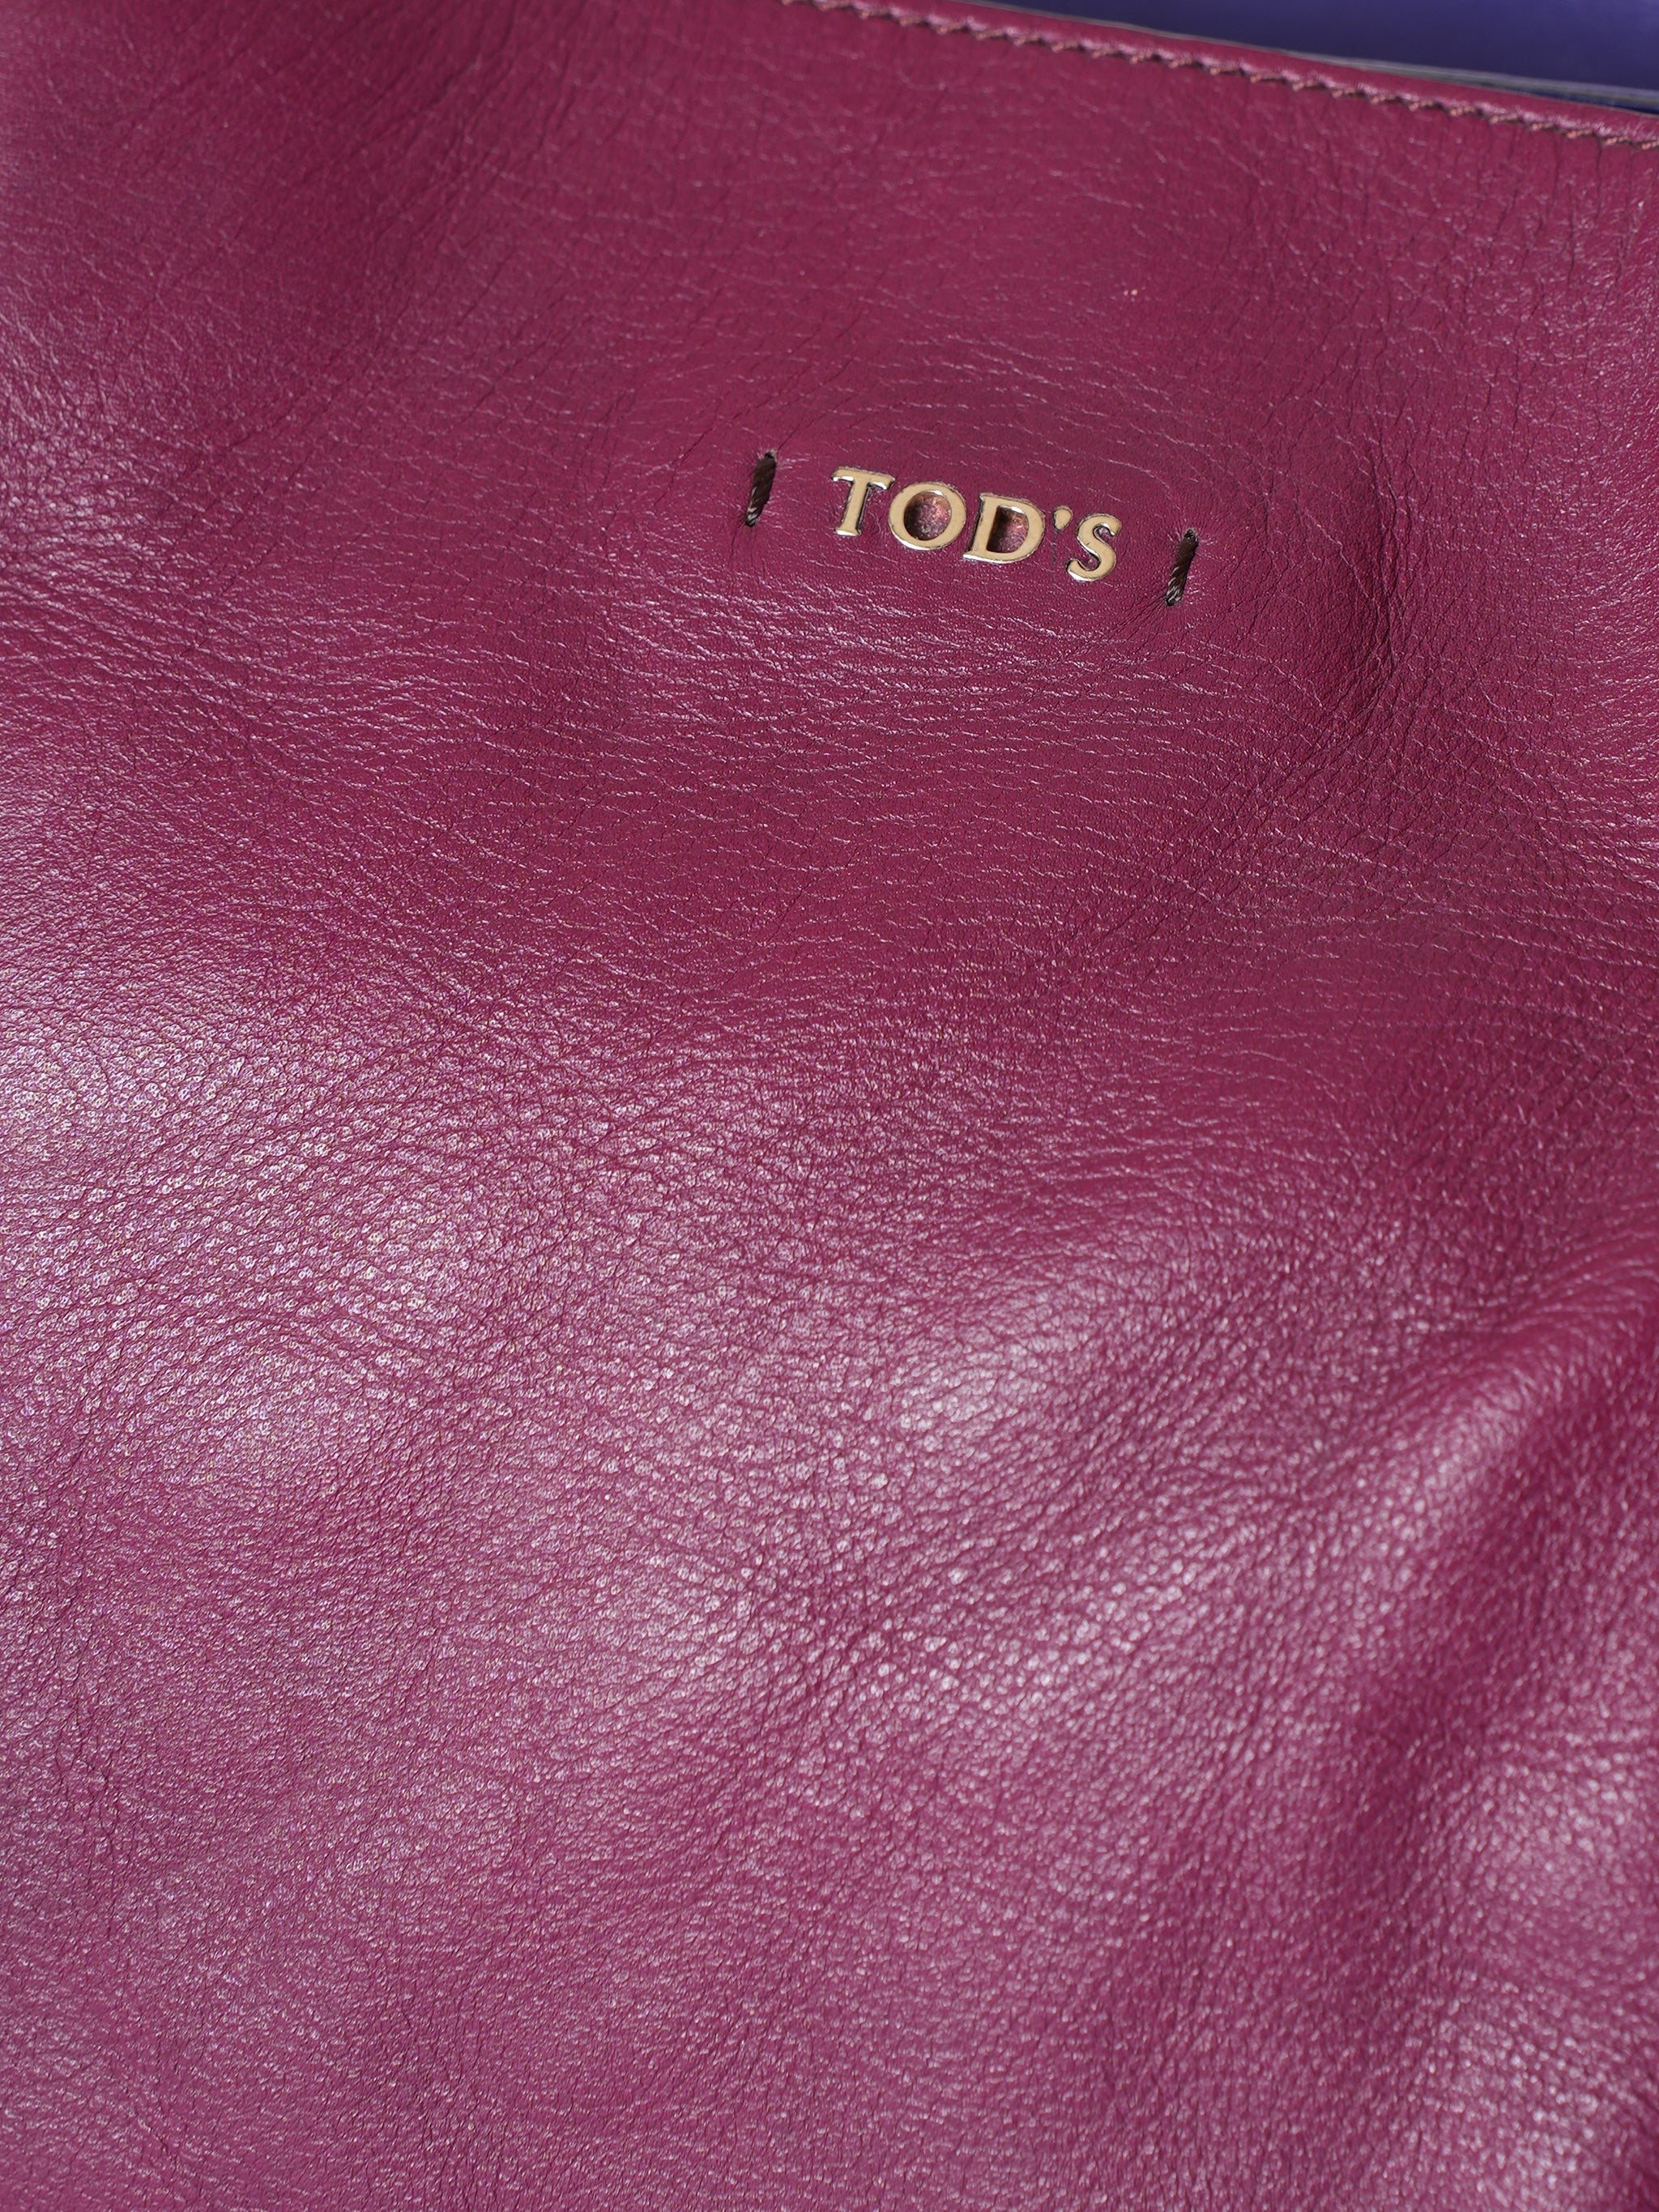 Tod's Burgundy Tote Bag